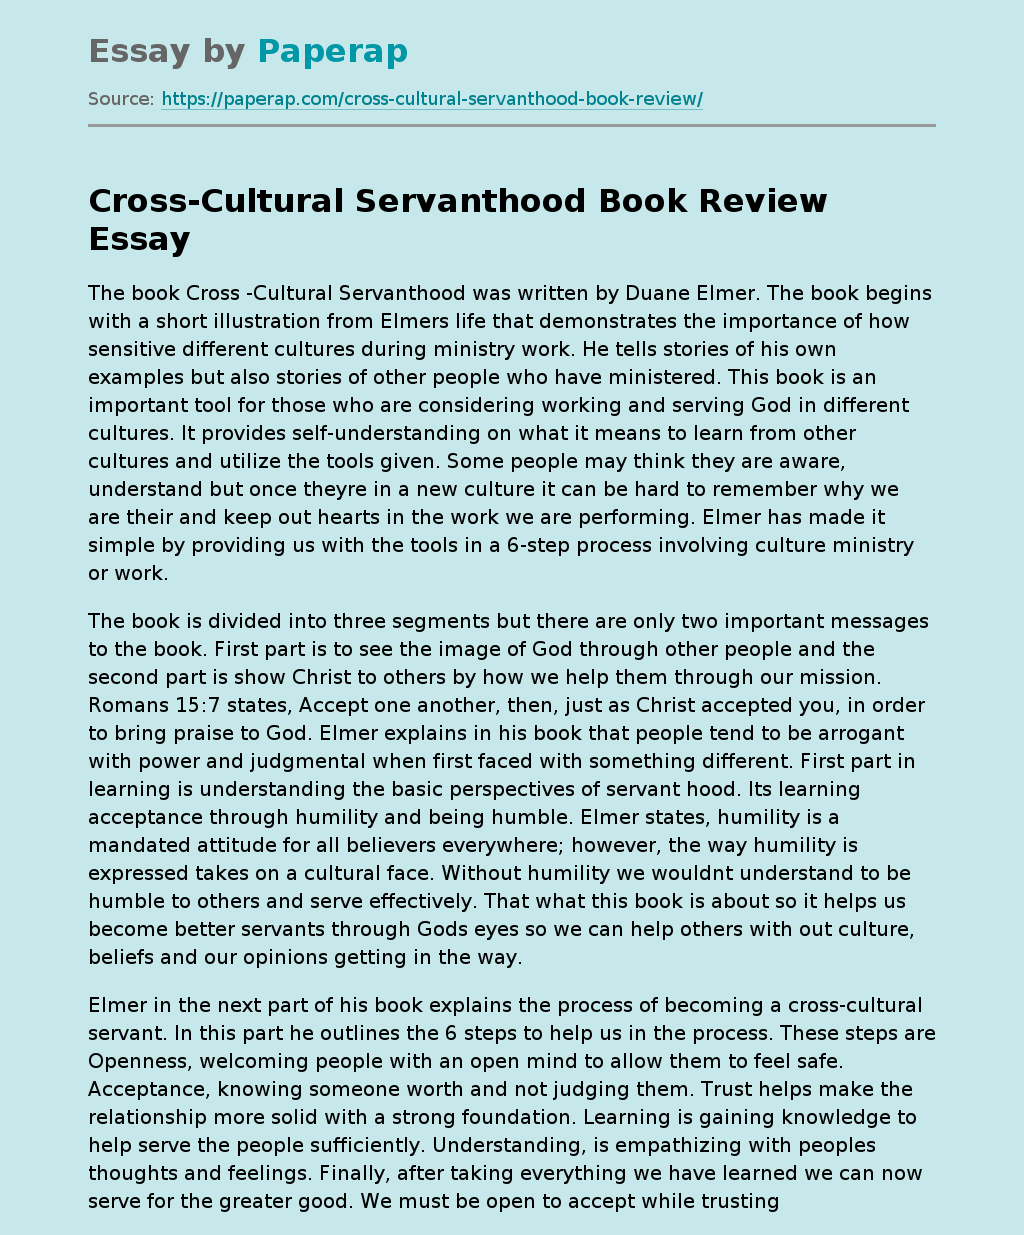 Cross-Cultural Servanthood Book Review